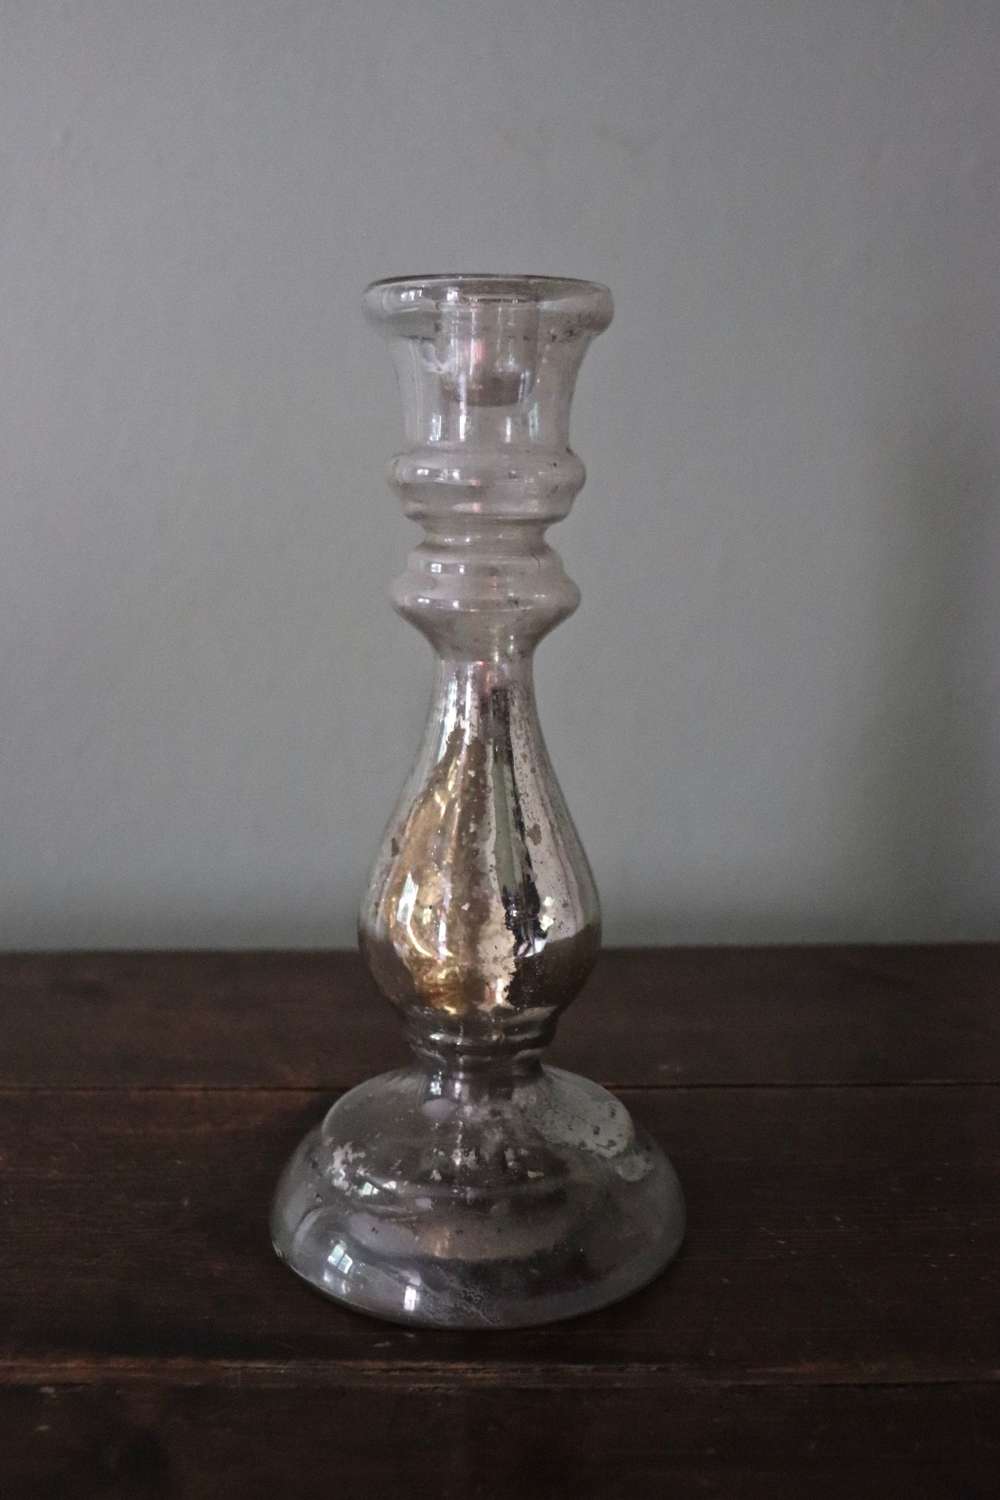 Early 20th century mercury glass candlestick